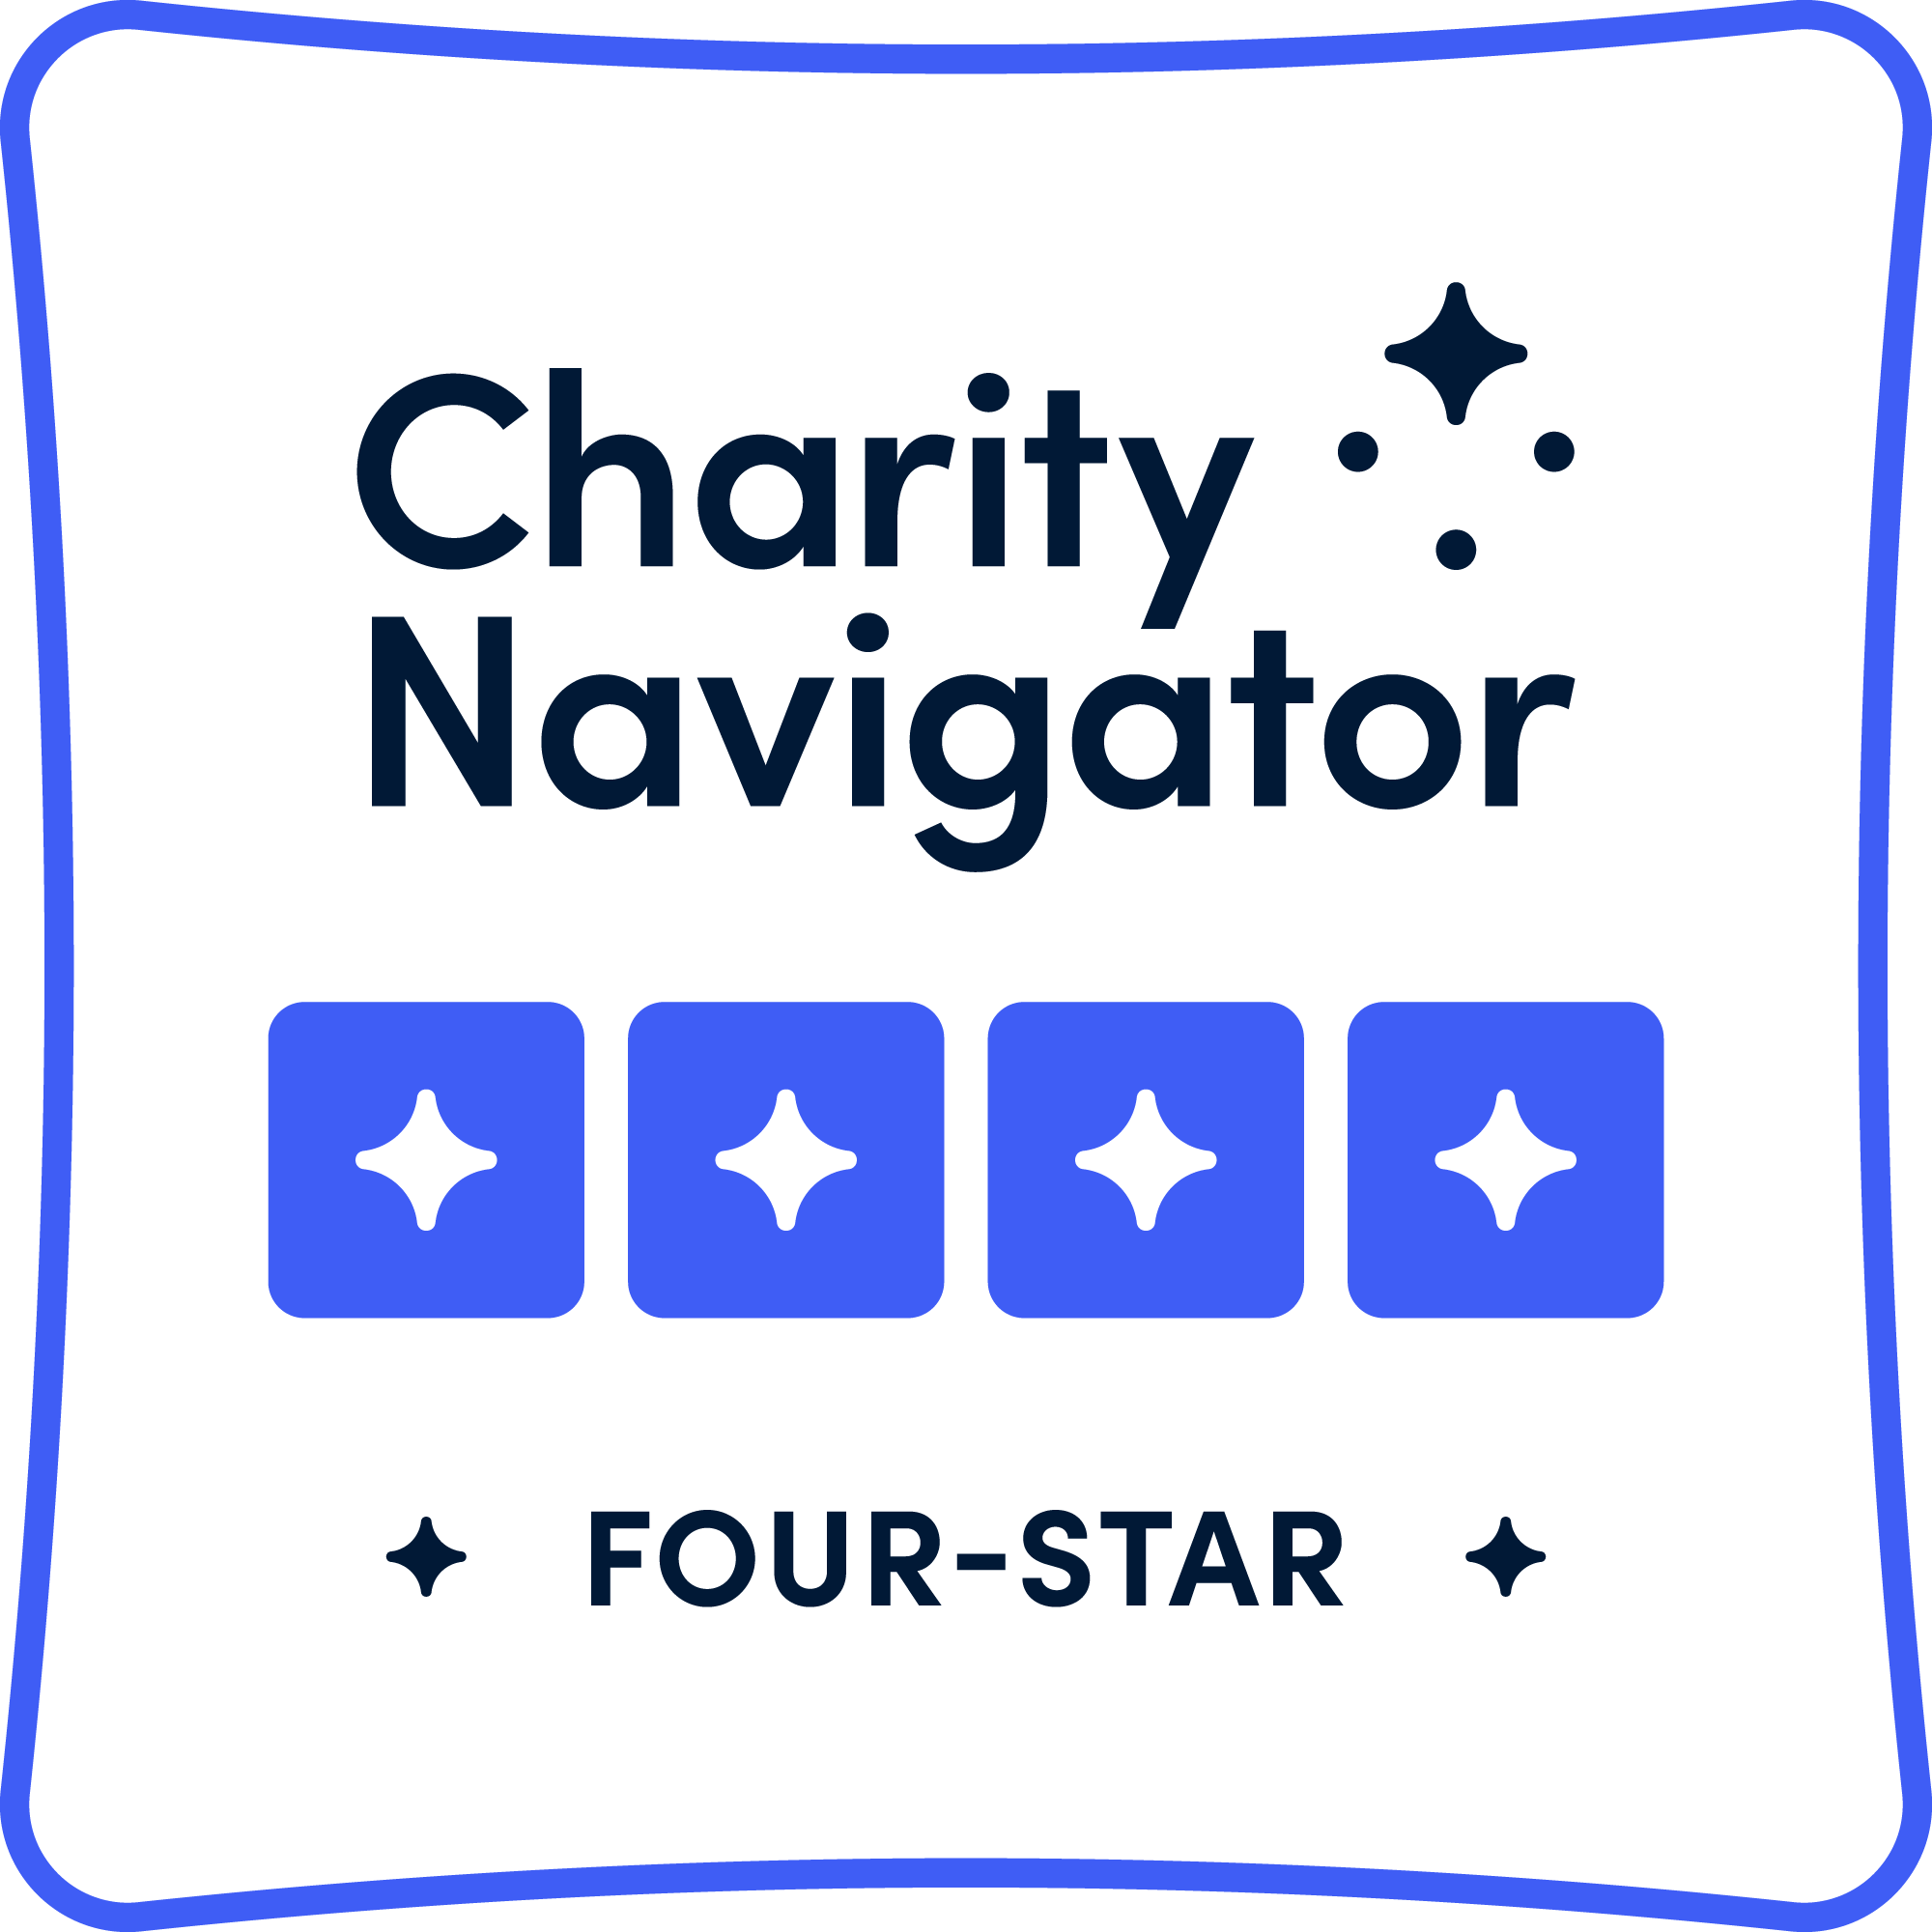 Charity Navigator Logo - 4 Star Recipient.